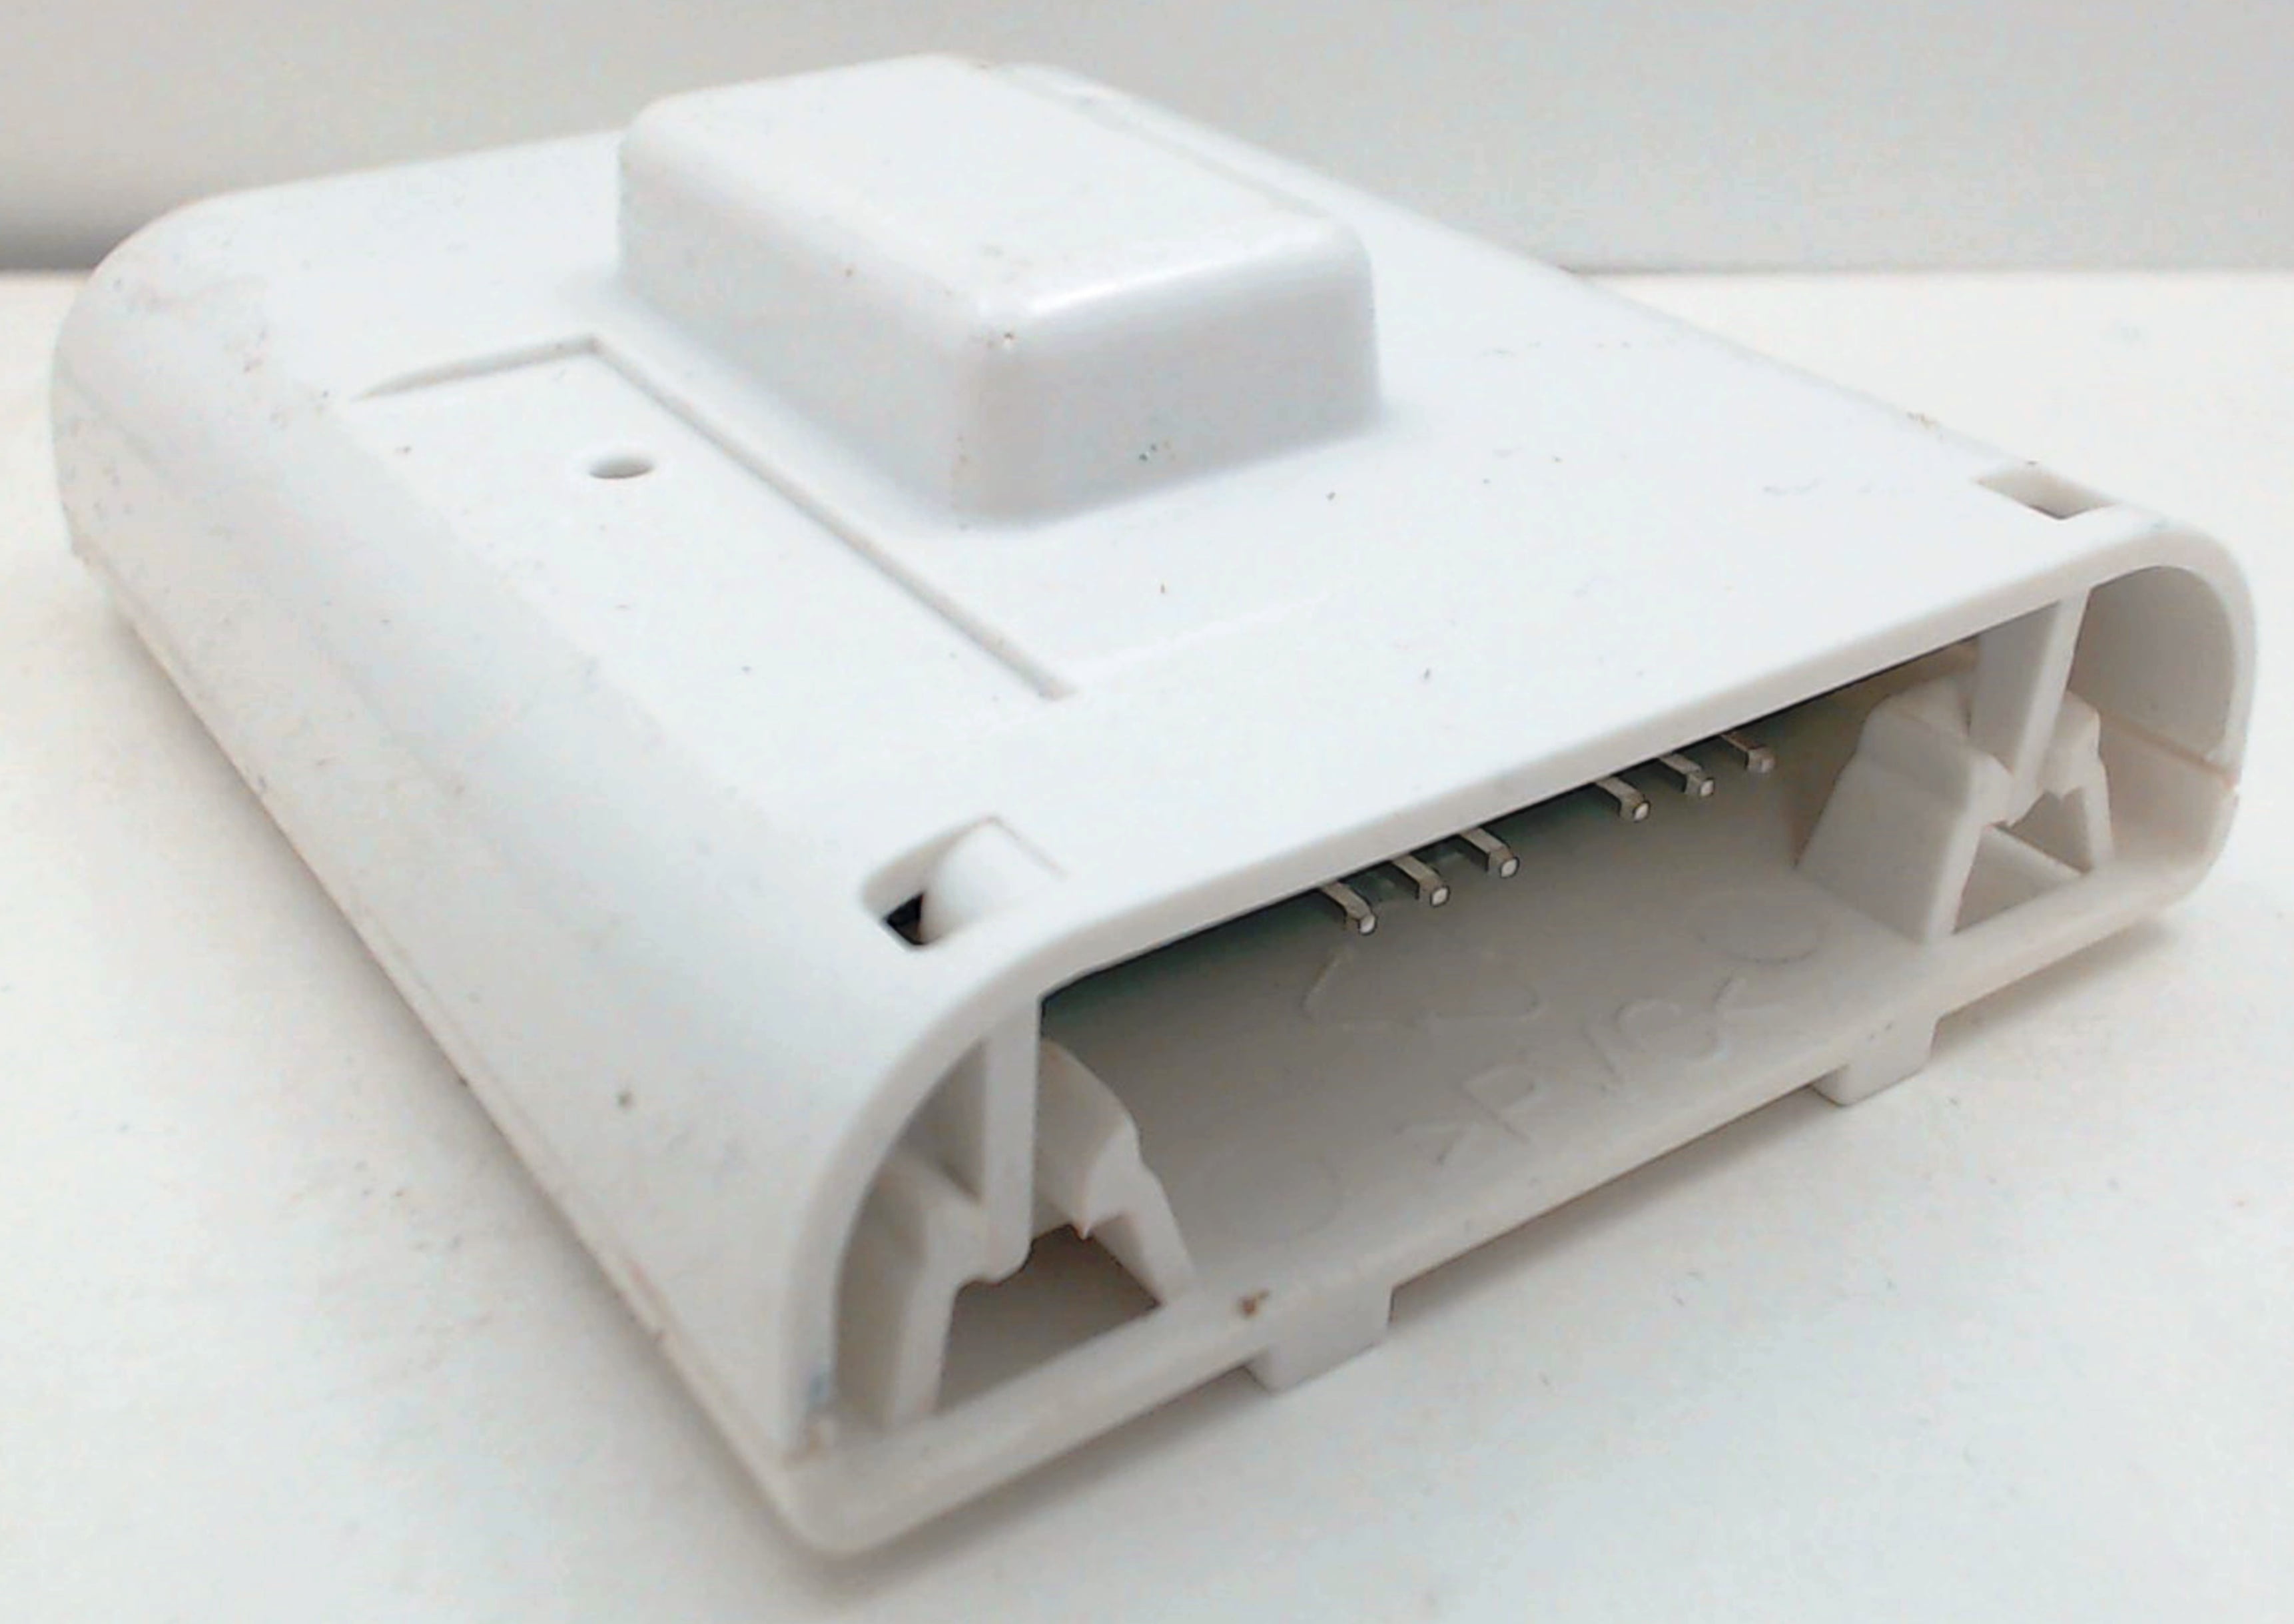 AP4070403 NEW Adaptive Defrost Control Board for Maytag Refrigerator # 61005988 